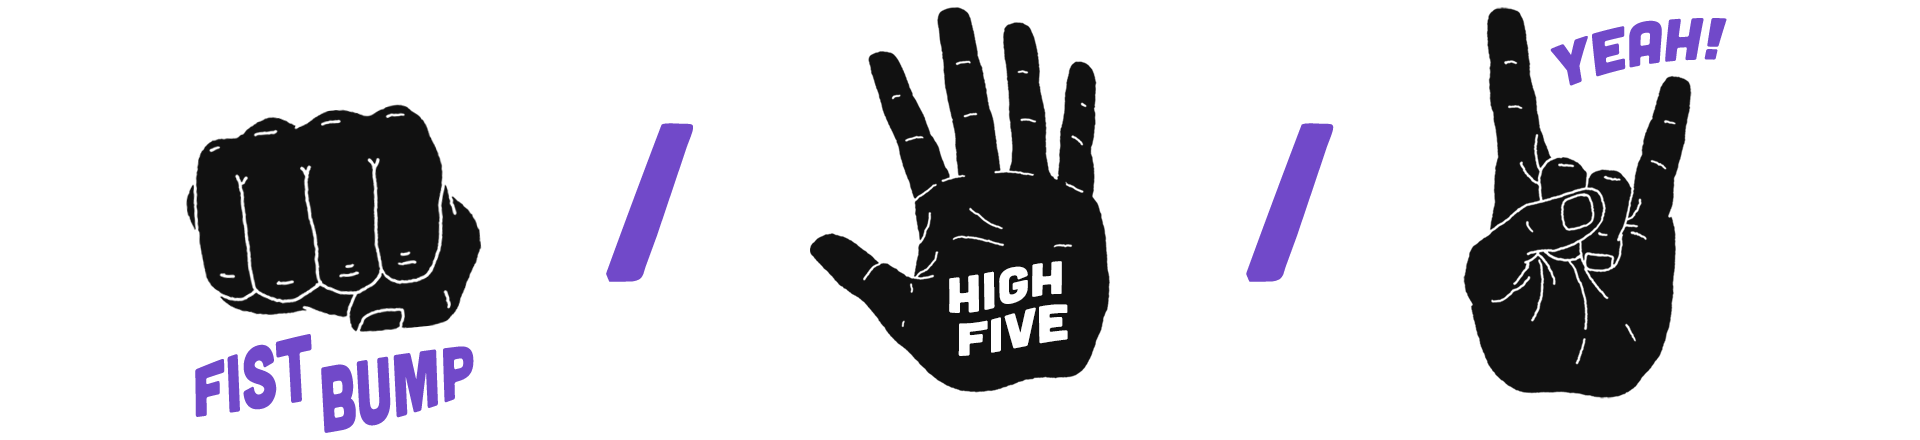 Fist Bump High Five Yeah Logo